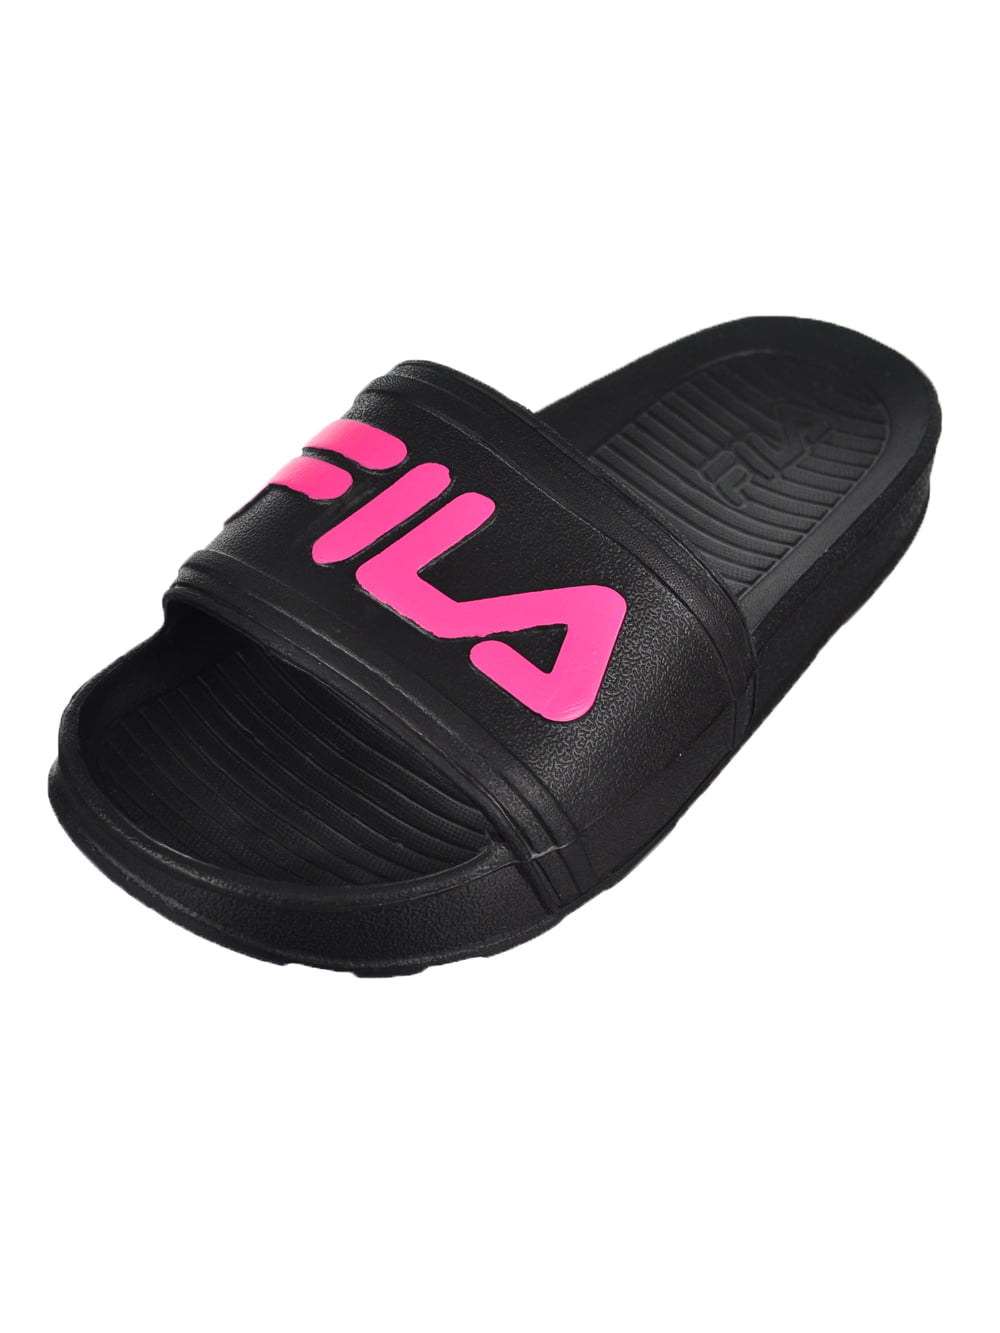 FILA - Fila Girls' Slide Sandals (Sizes 